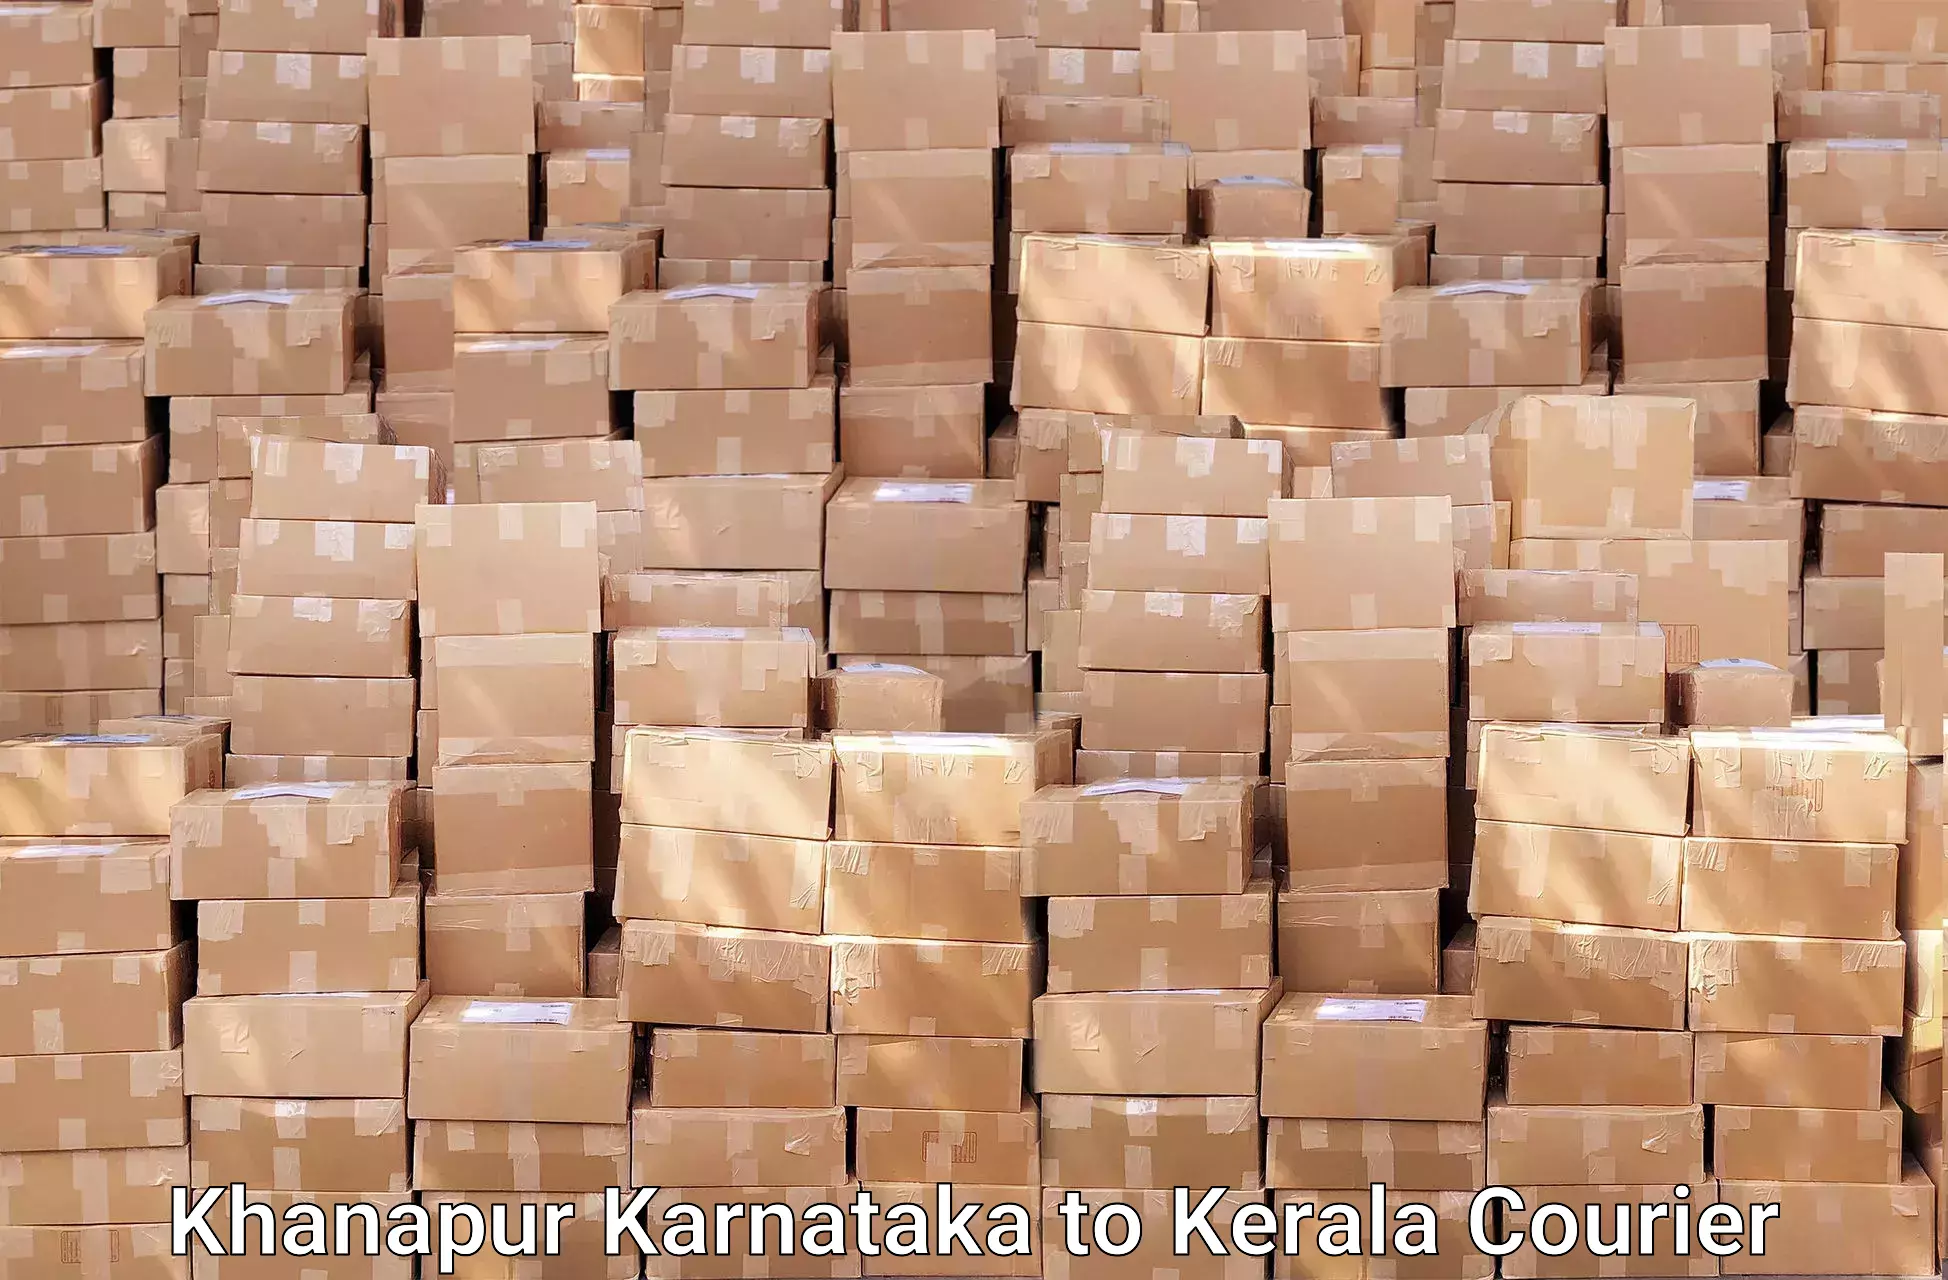 Professional moving company Khanapur Karnataka to Trivandrum